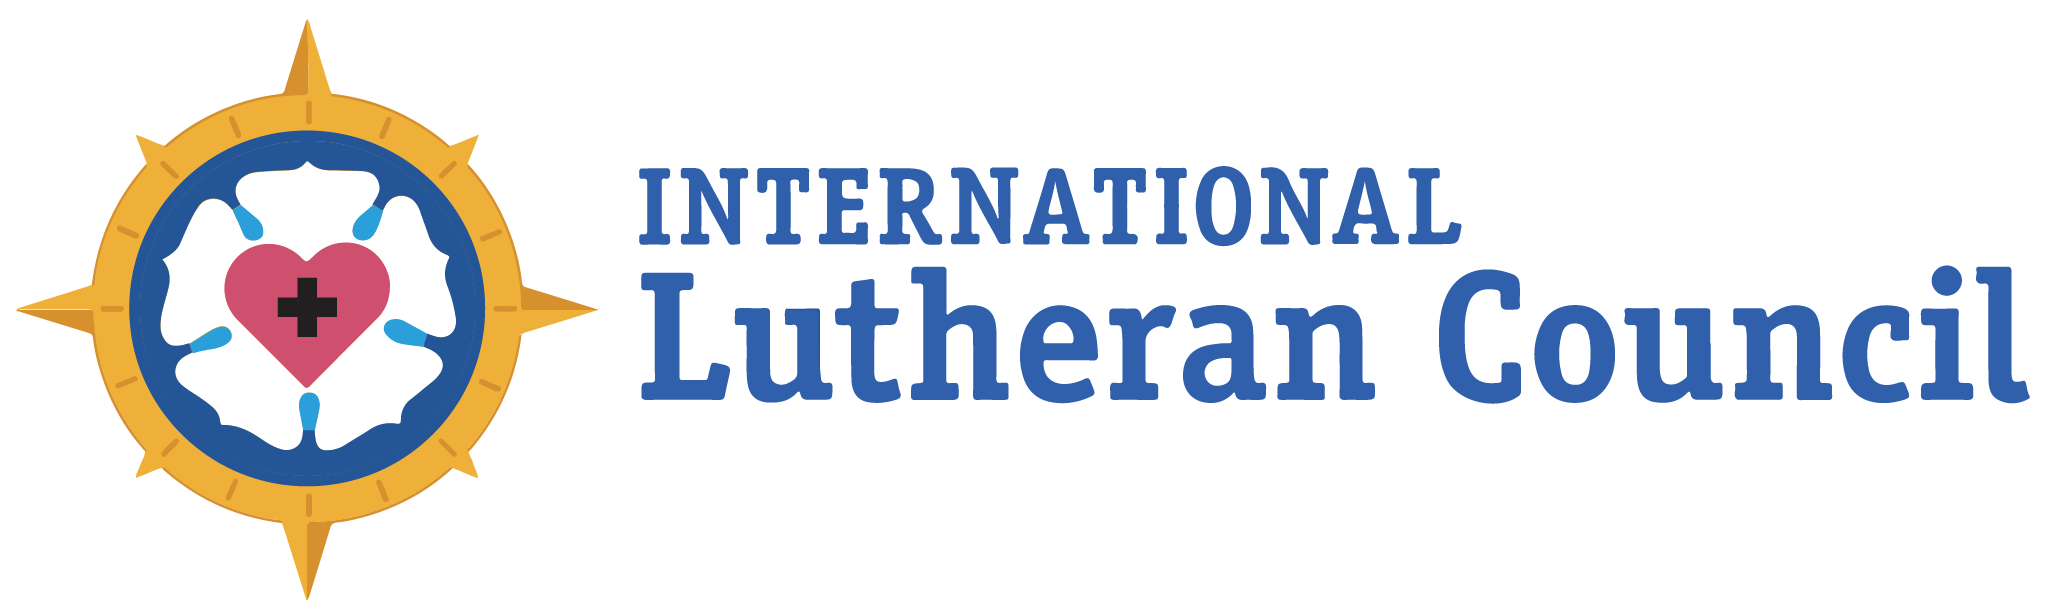 International Lutheran Council (ILC)